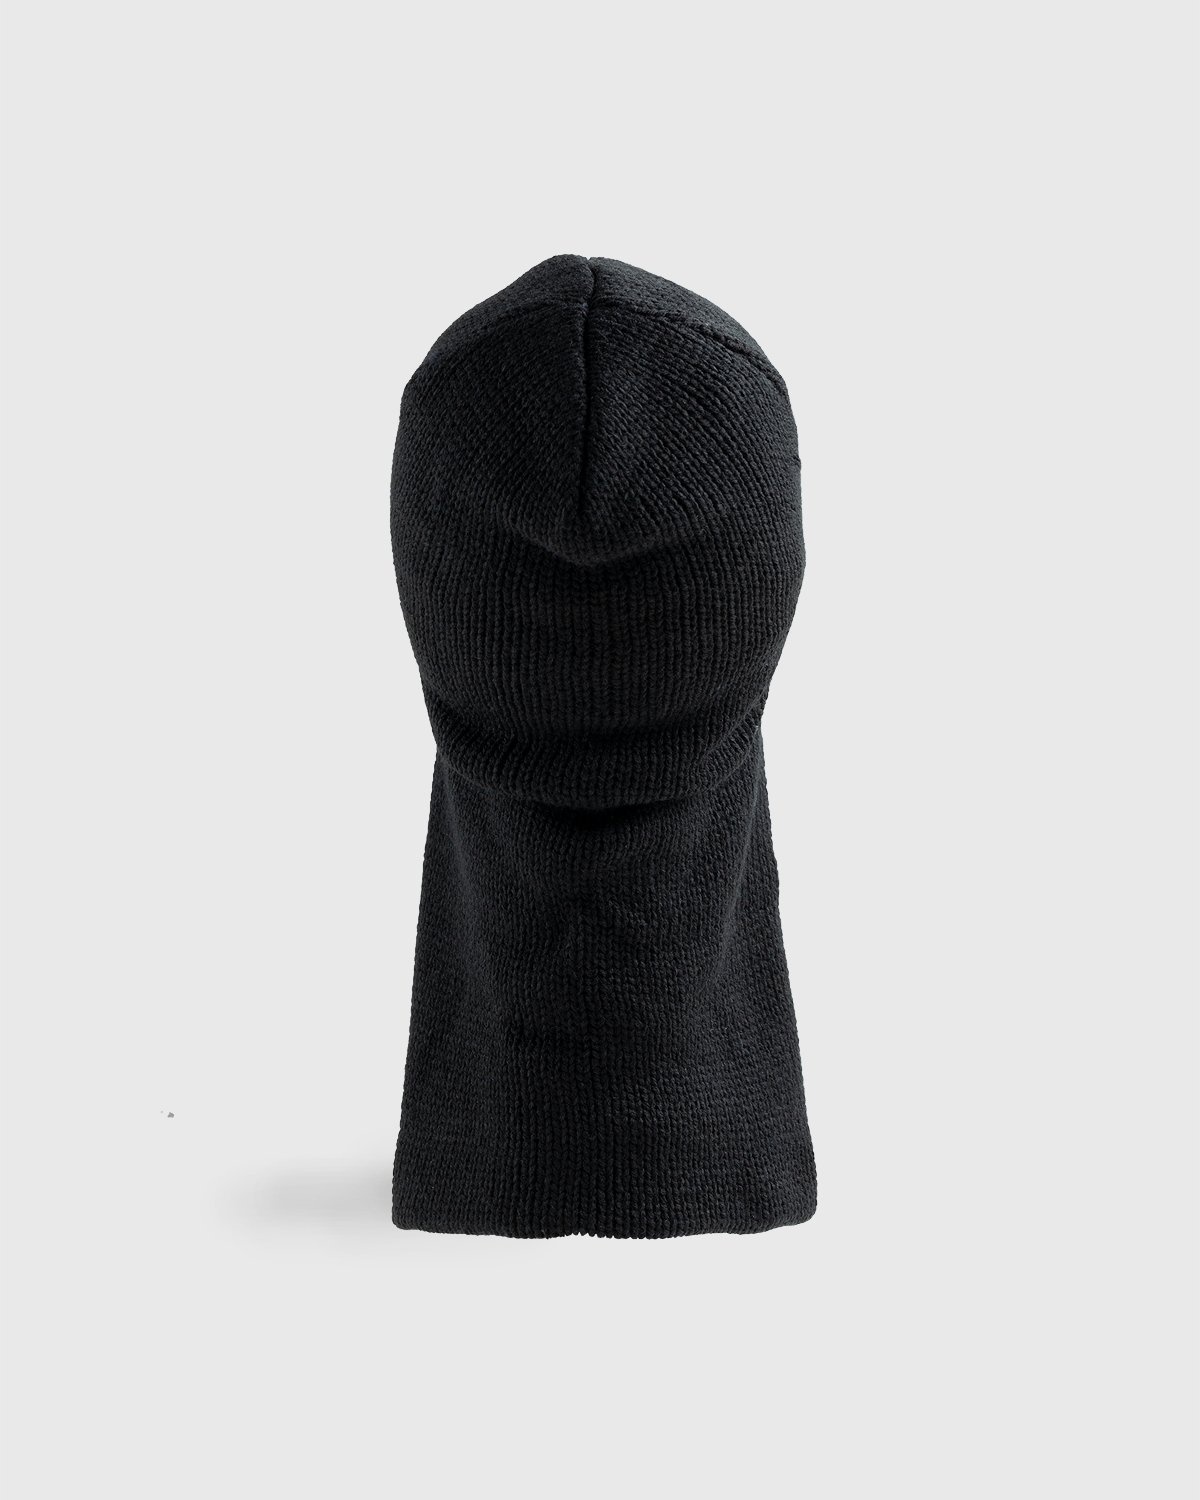 Carhartt WIP – Storm Mask Black - Hats - Black - Image 4